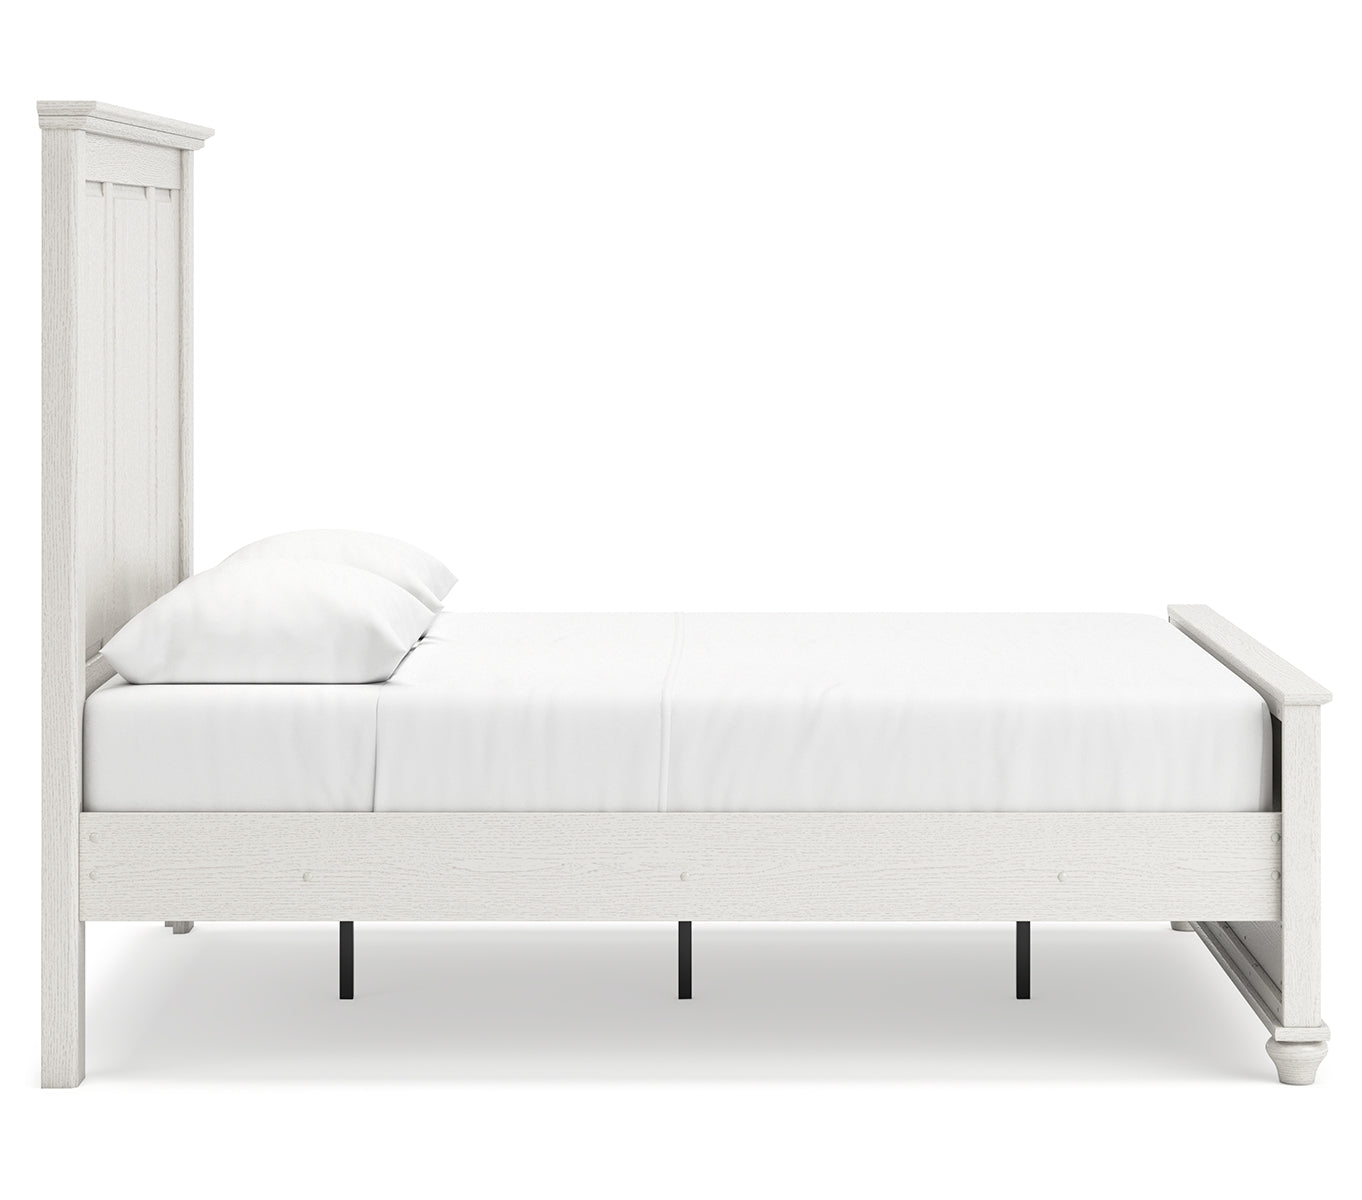 Grantoni Queen Panel Bed with Mirrored Dresser